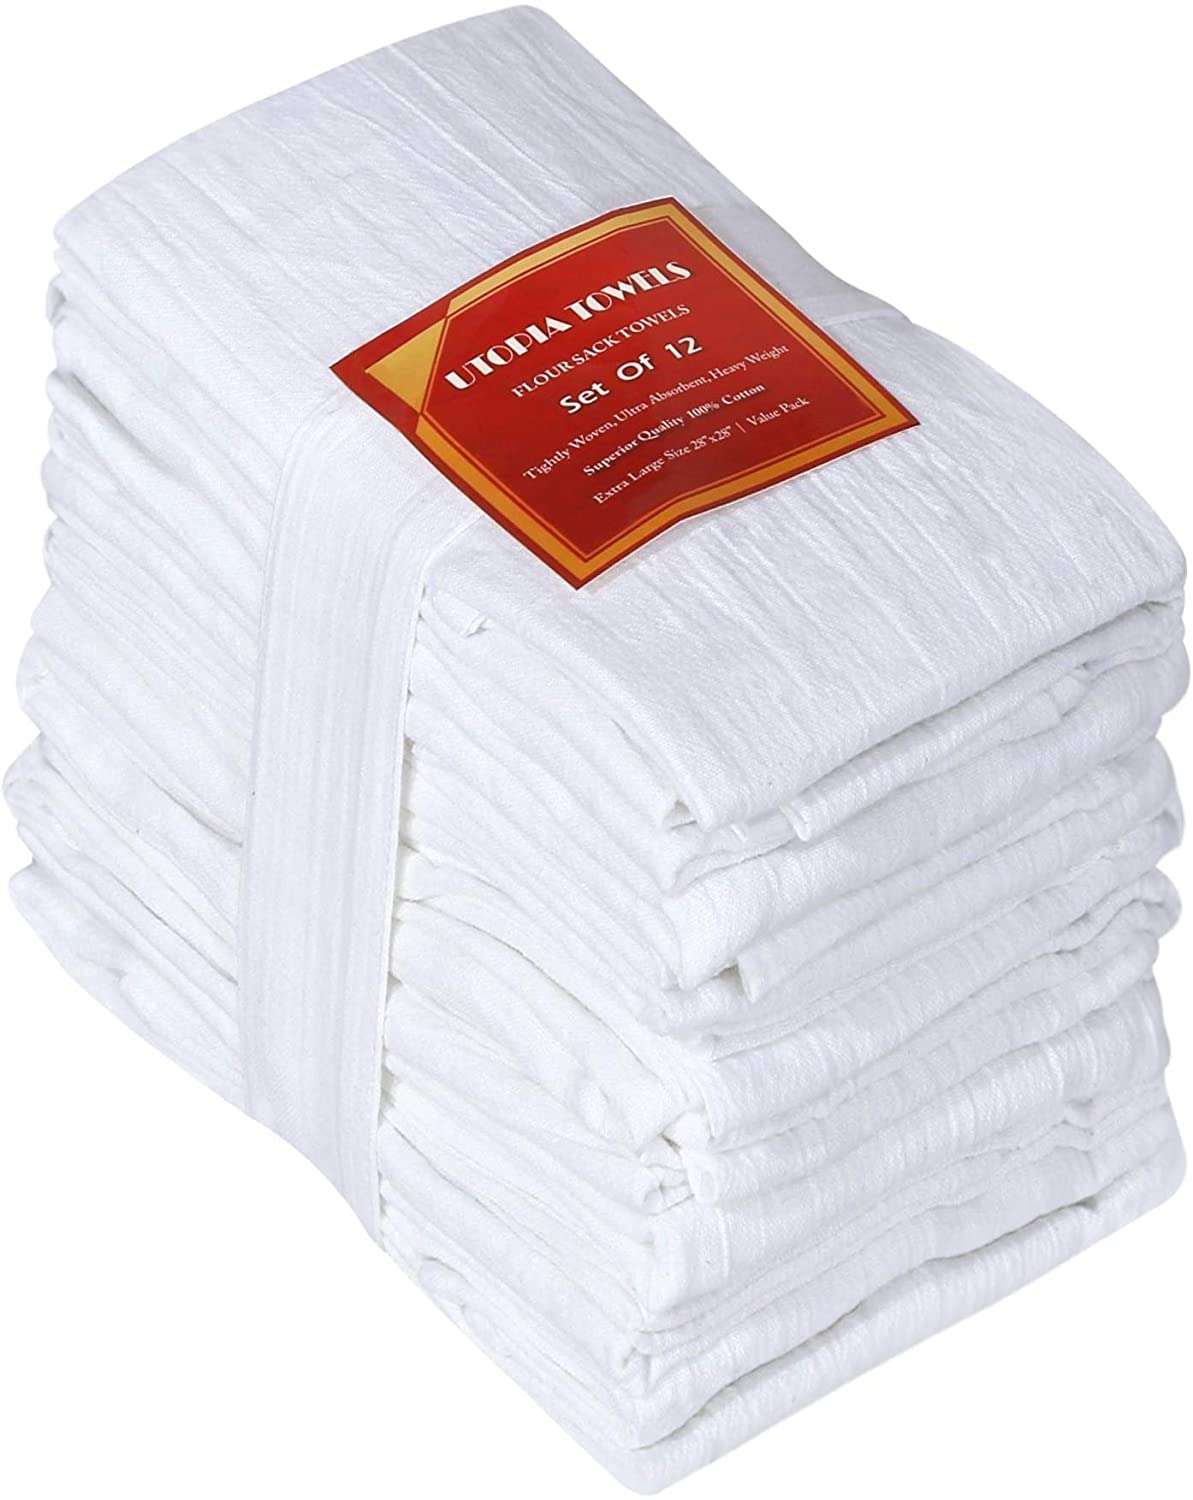 Zeppoli Classic White Kitchen Towels, 45-Pack 100% Natural Cotton Dish Towels, x